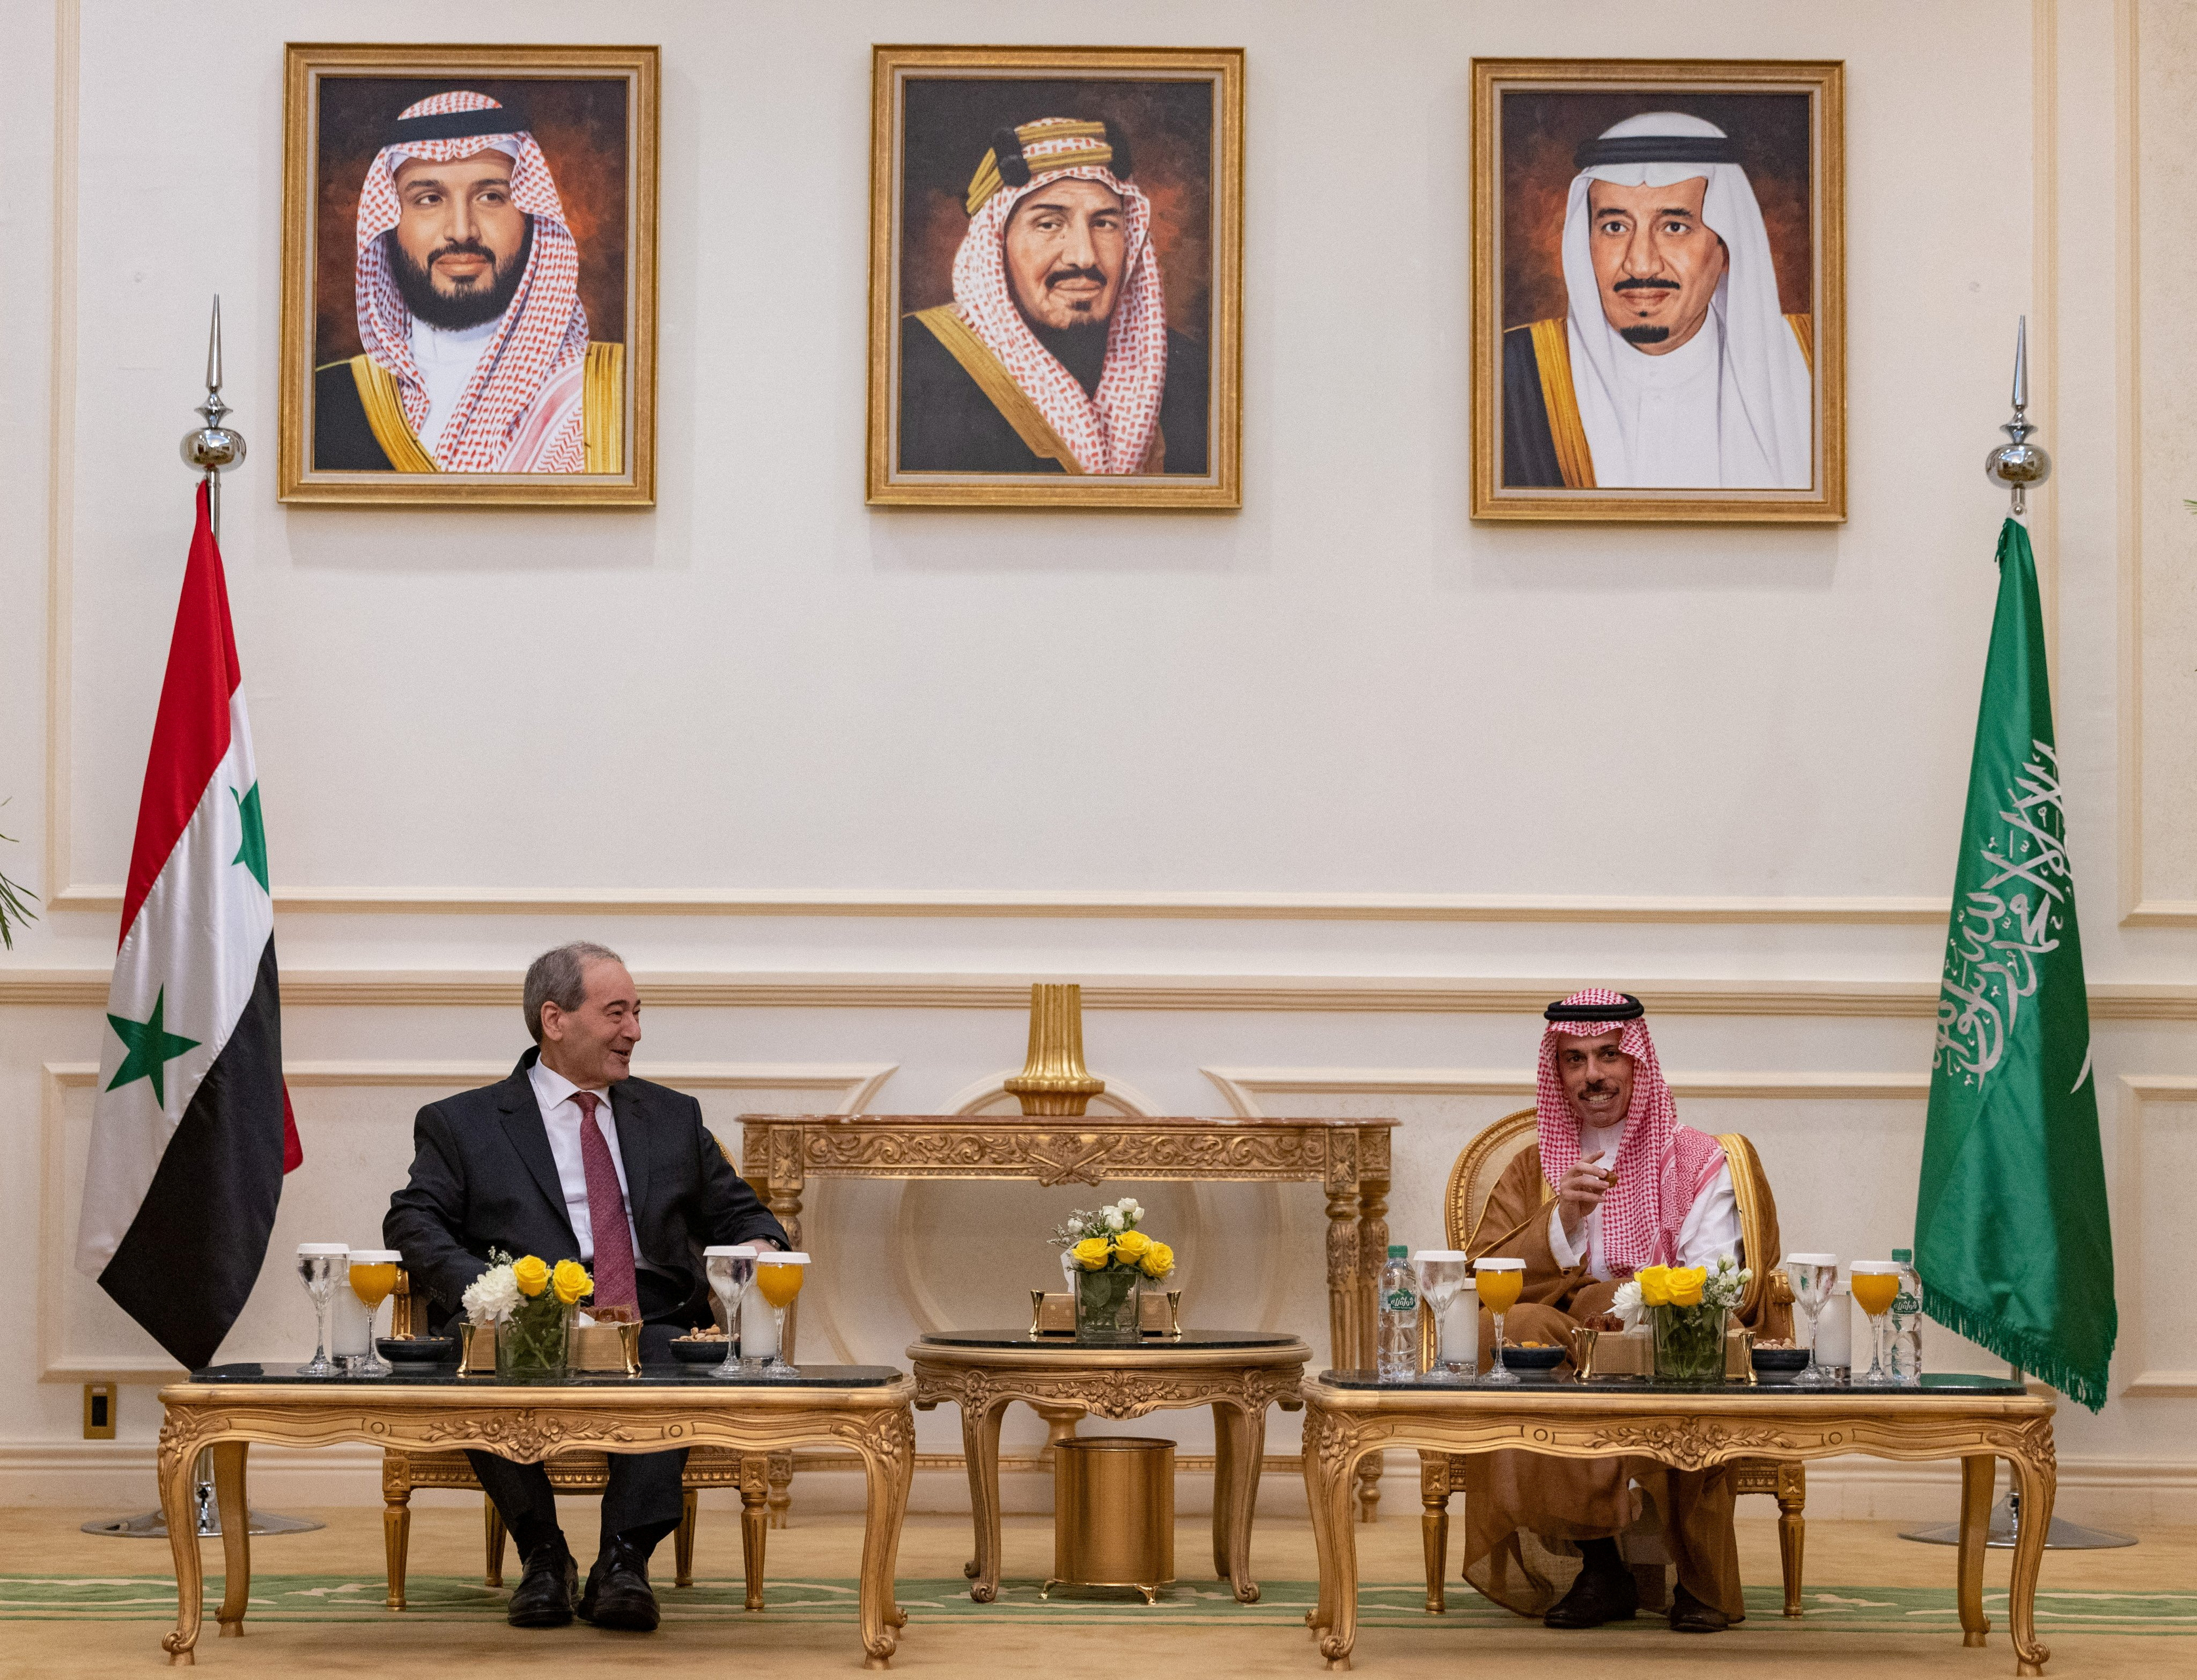 Saudi Foreign Minister Prince Faisal bin Farhan bin Abdullah meets with Syrian Minister of Foreign Affairs and Expatriates Faisal Mekdad in Jeddah, Saudi Arabia